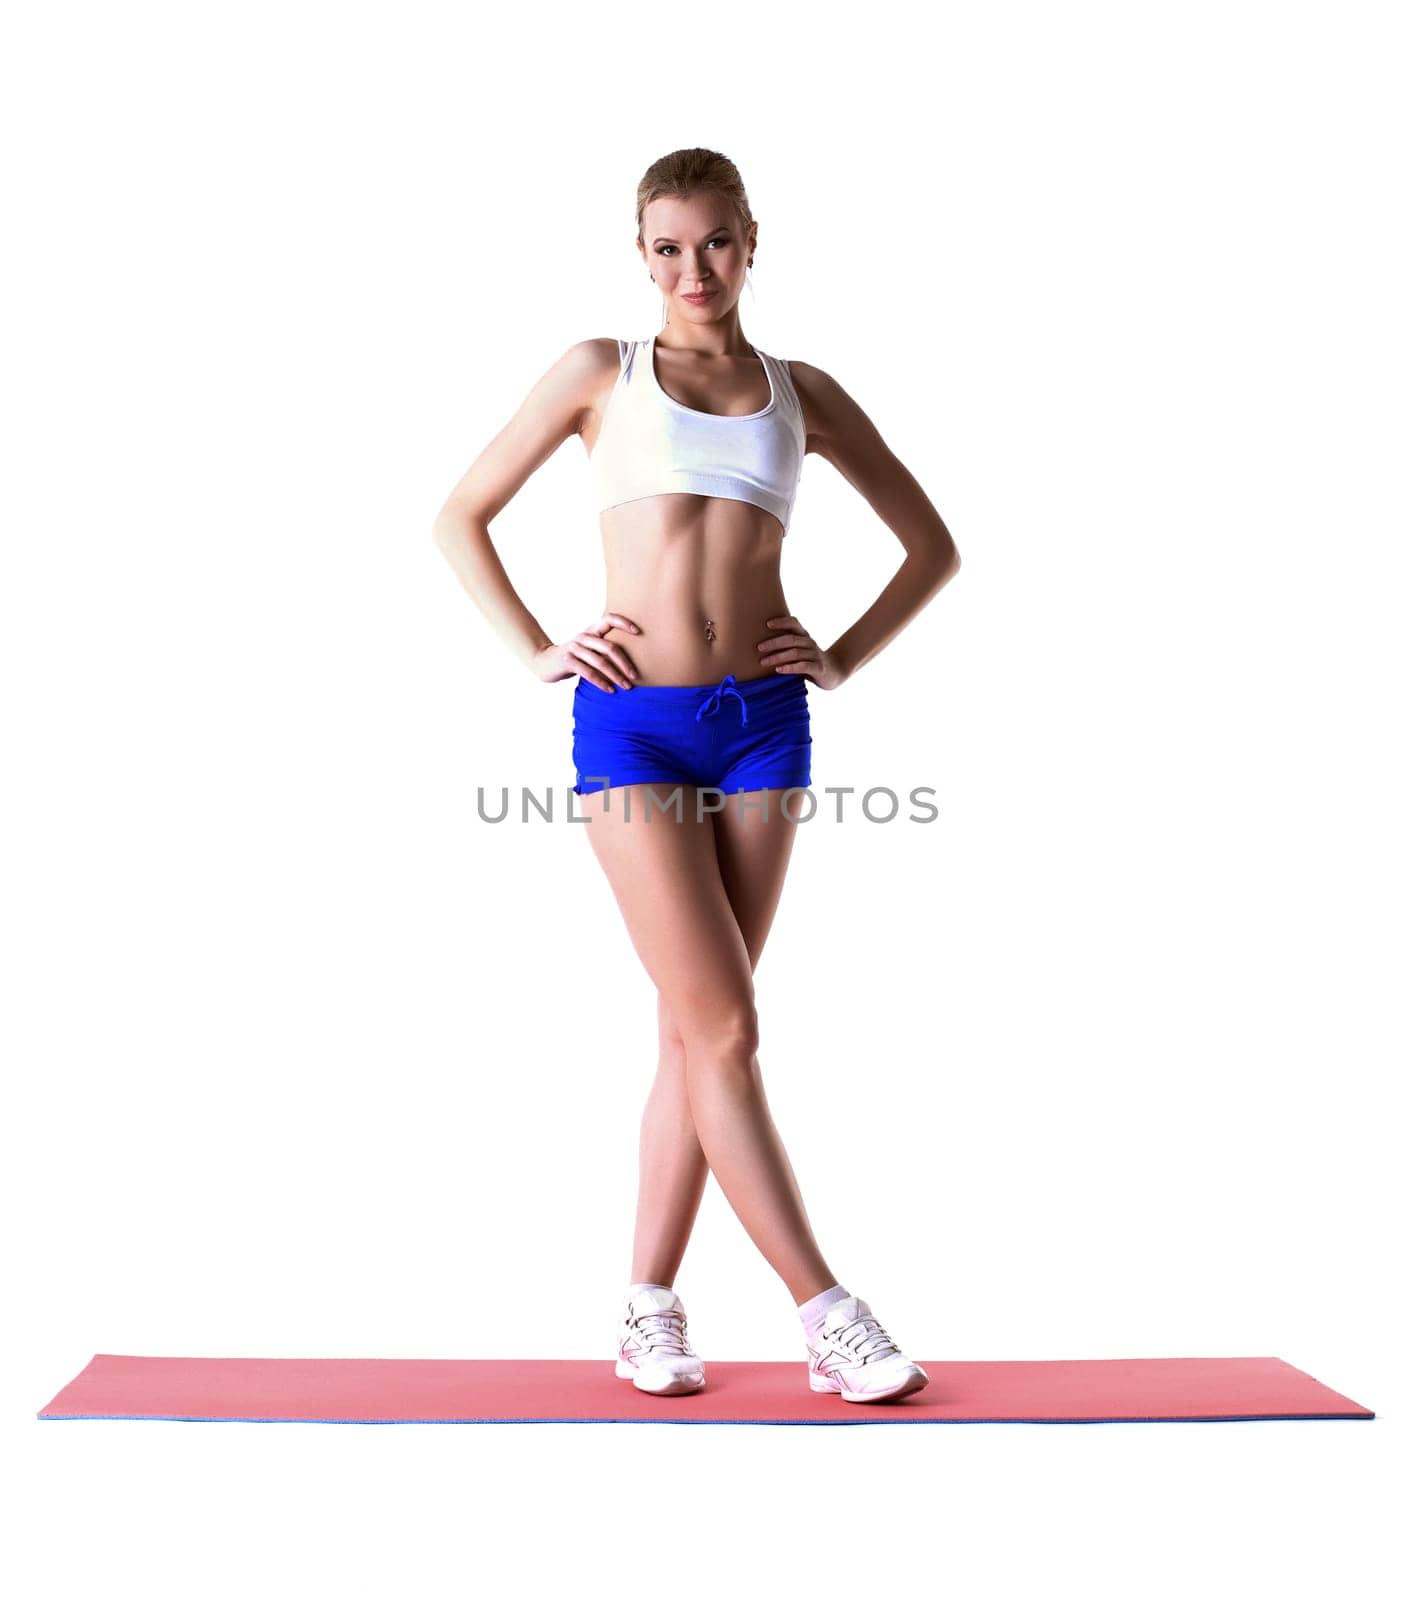 Beautiful slim woman posing on gymnastic mat by rivertime